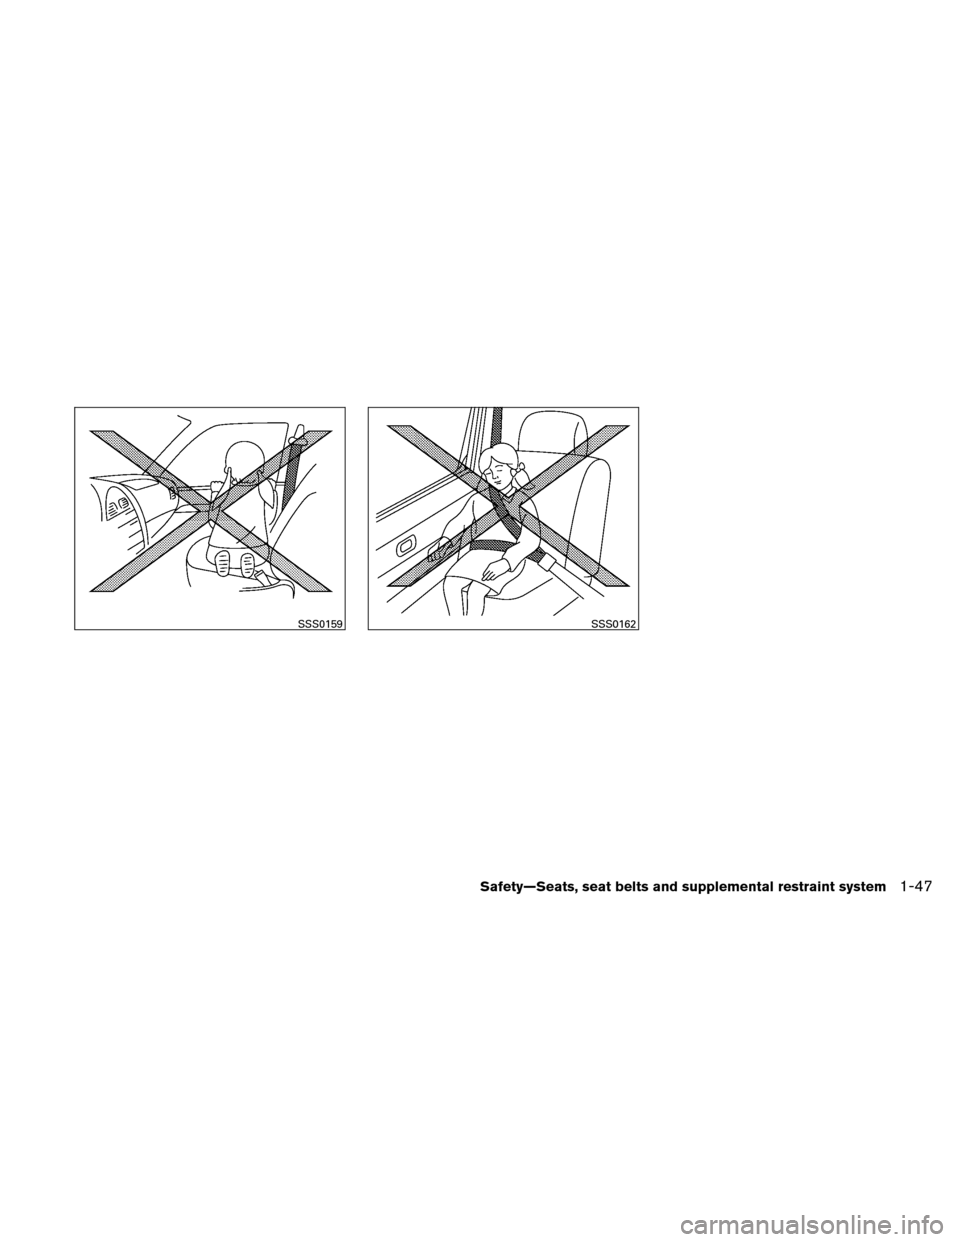 NISSAN VERSA HATCHBACK 2010 1.G Repair Manual SSS0159SSS0162
Safety—Seats, seat belts and supplemental restraint system1-47 